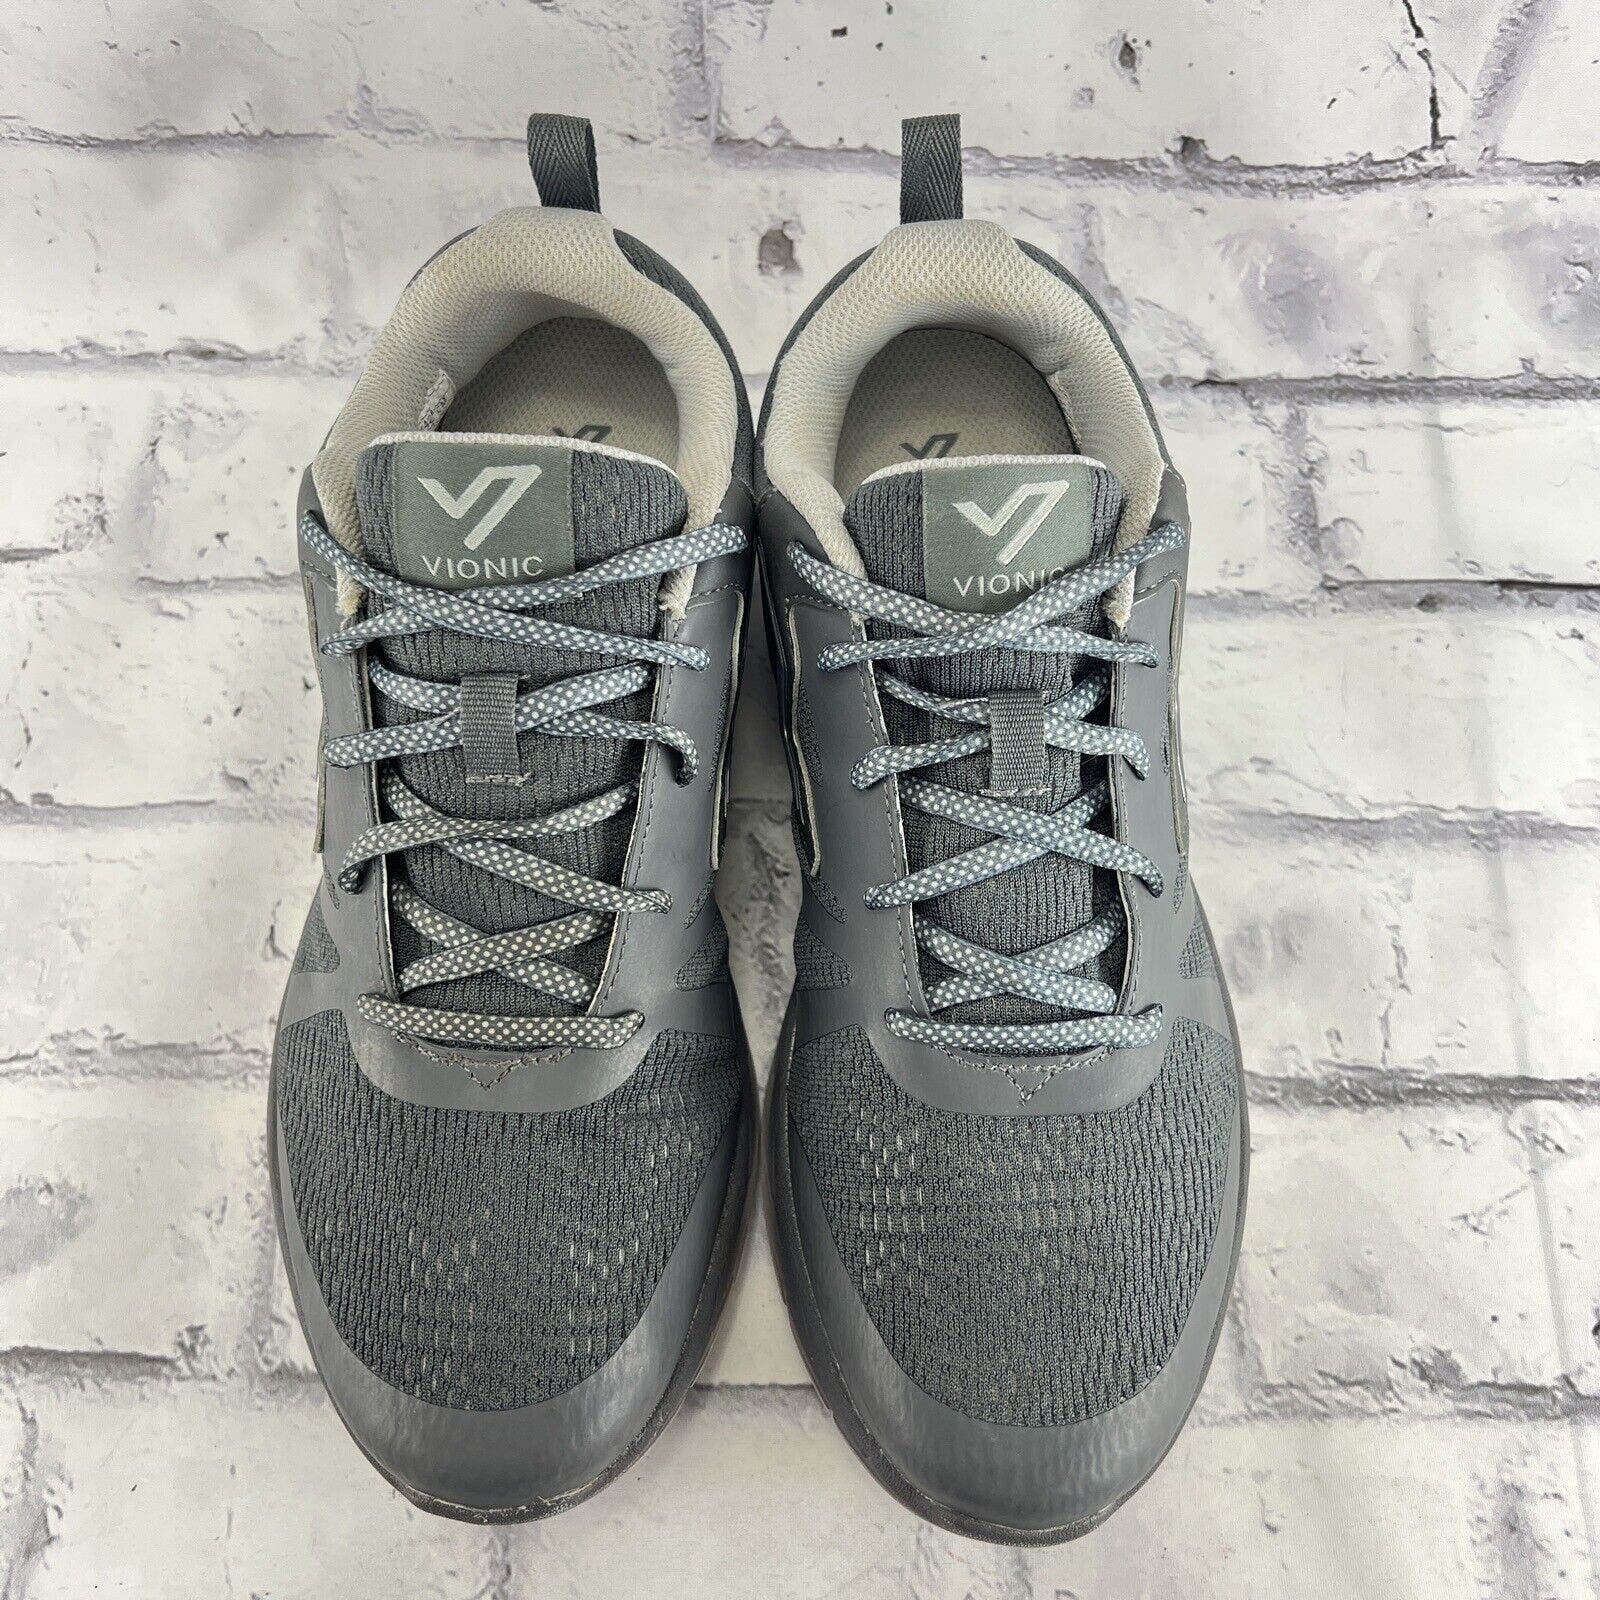 Vionic 365 Miles Sneakers Women’s Size 10 Active Athletic Gray Comfort Shoe